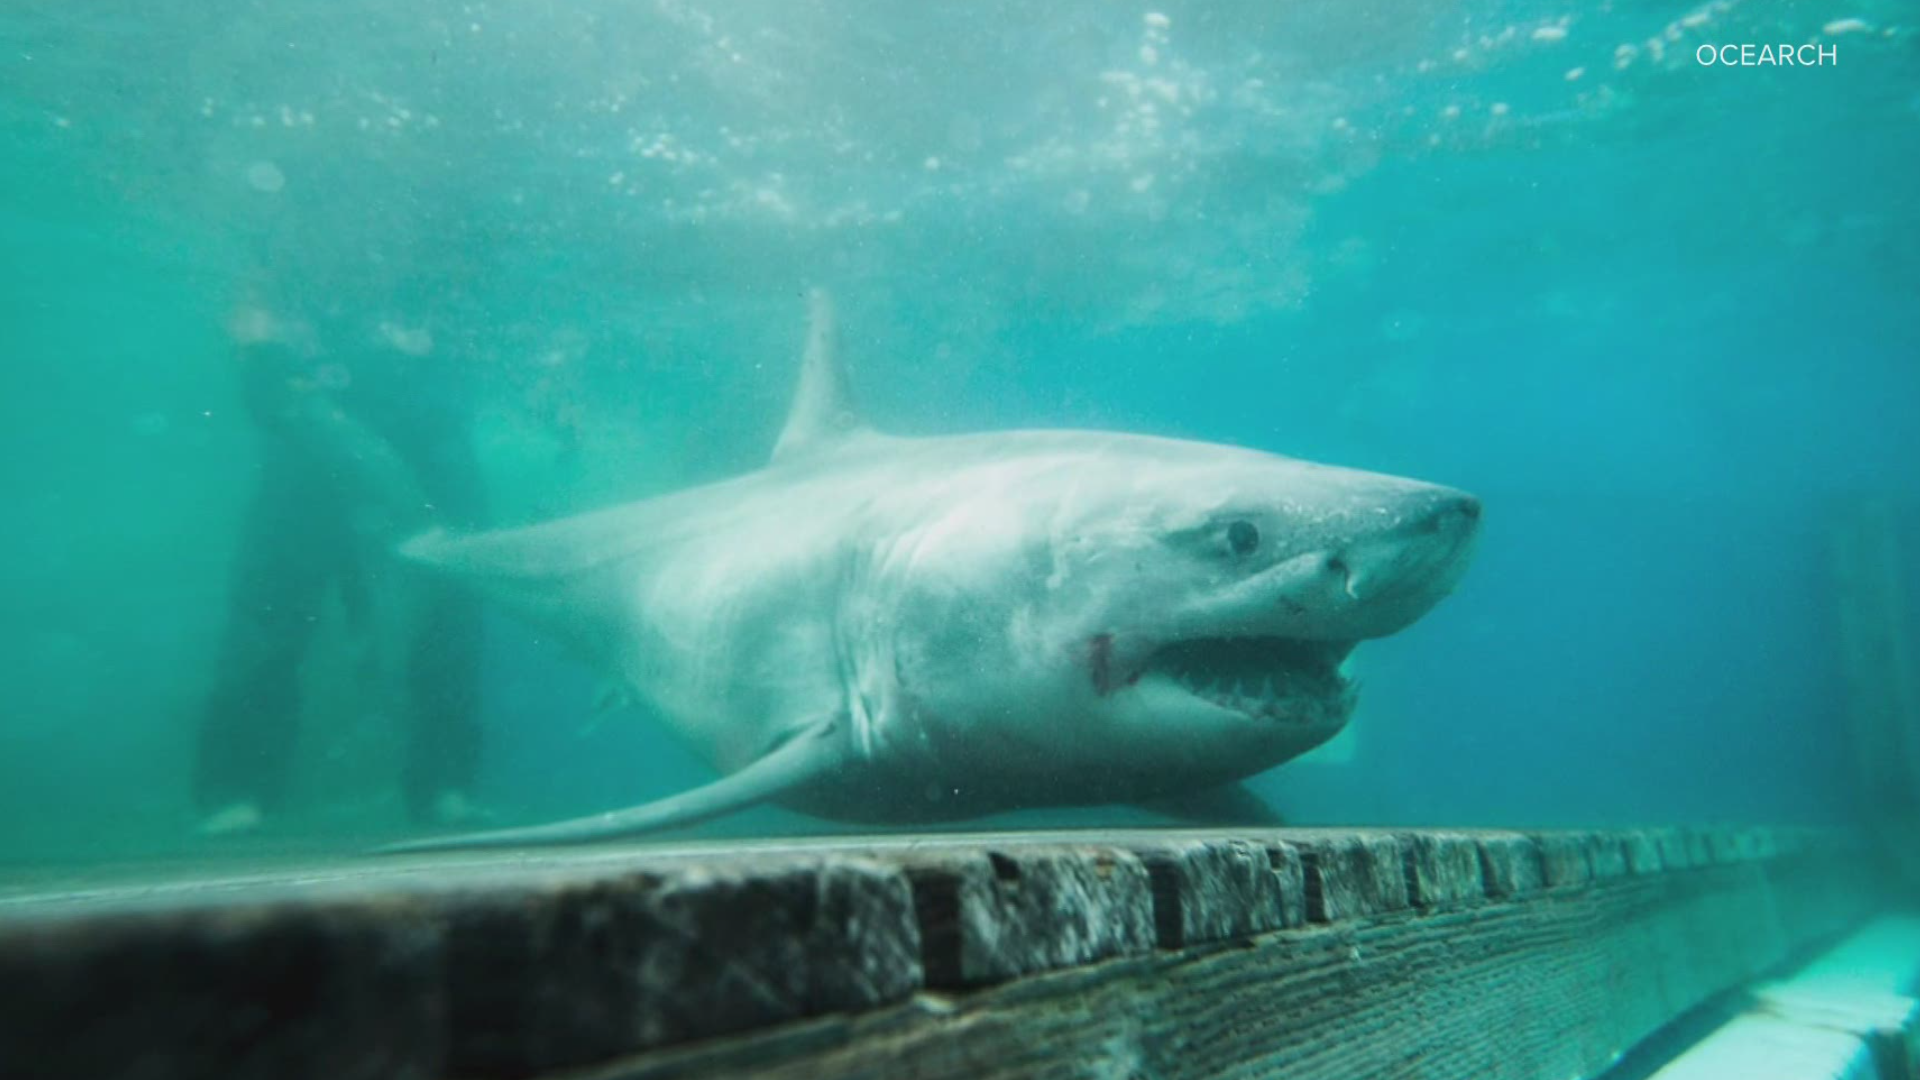 The sandbar shark is the most common shark found in the Chesapeake Bay and along the mid-Atlantic coast.